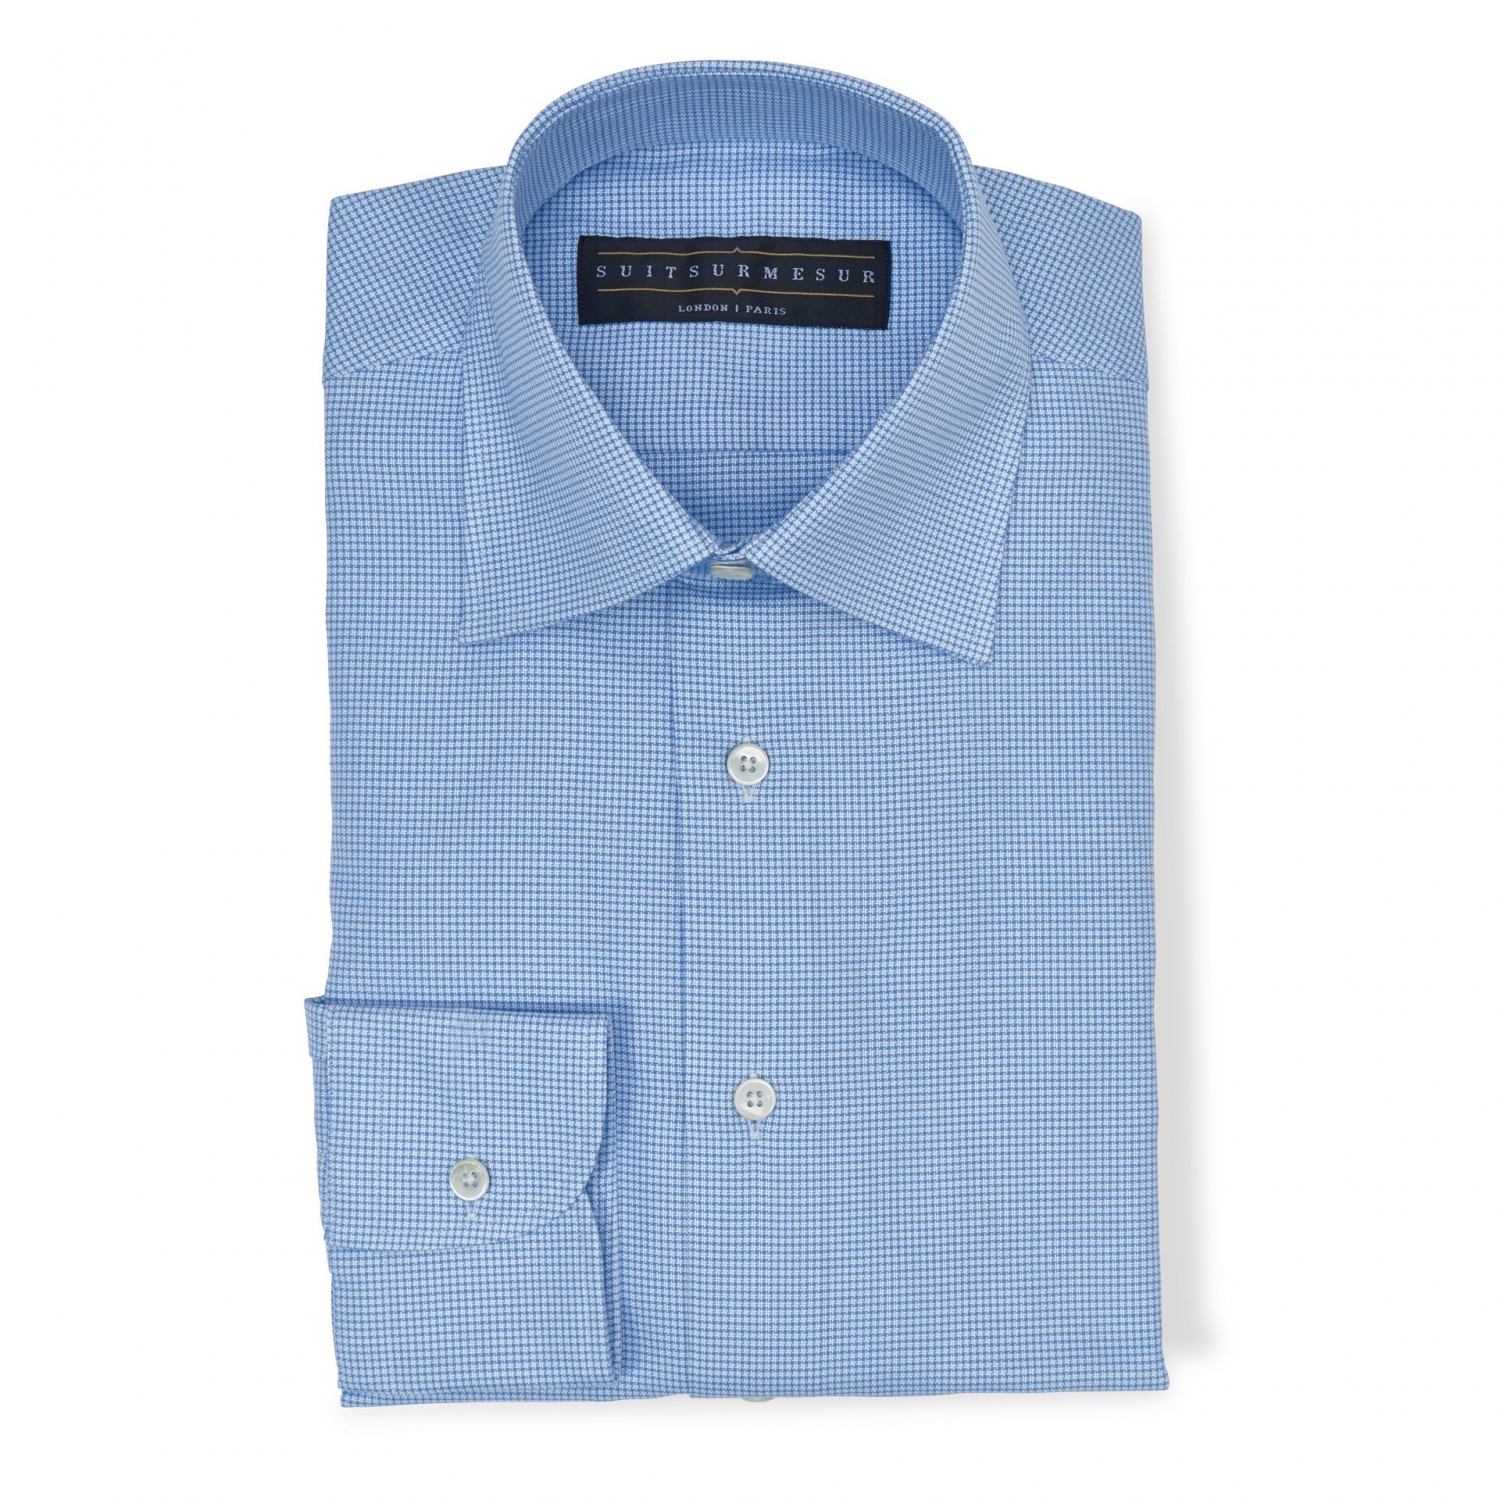 Blue check (half Italian collar) shirt - 100% cotton Canclini fabric